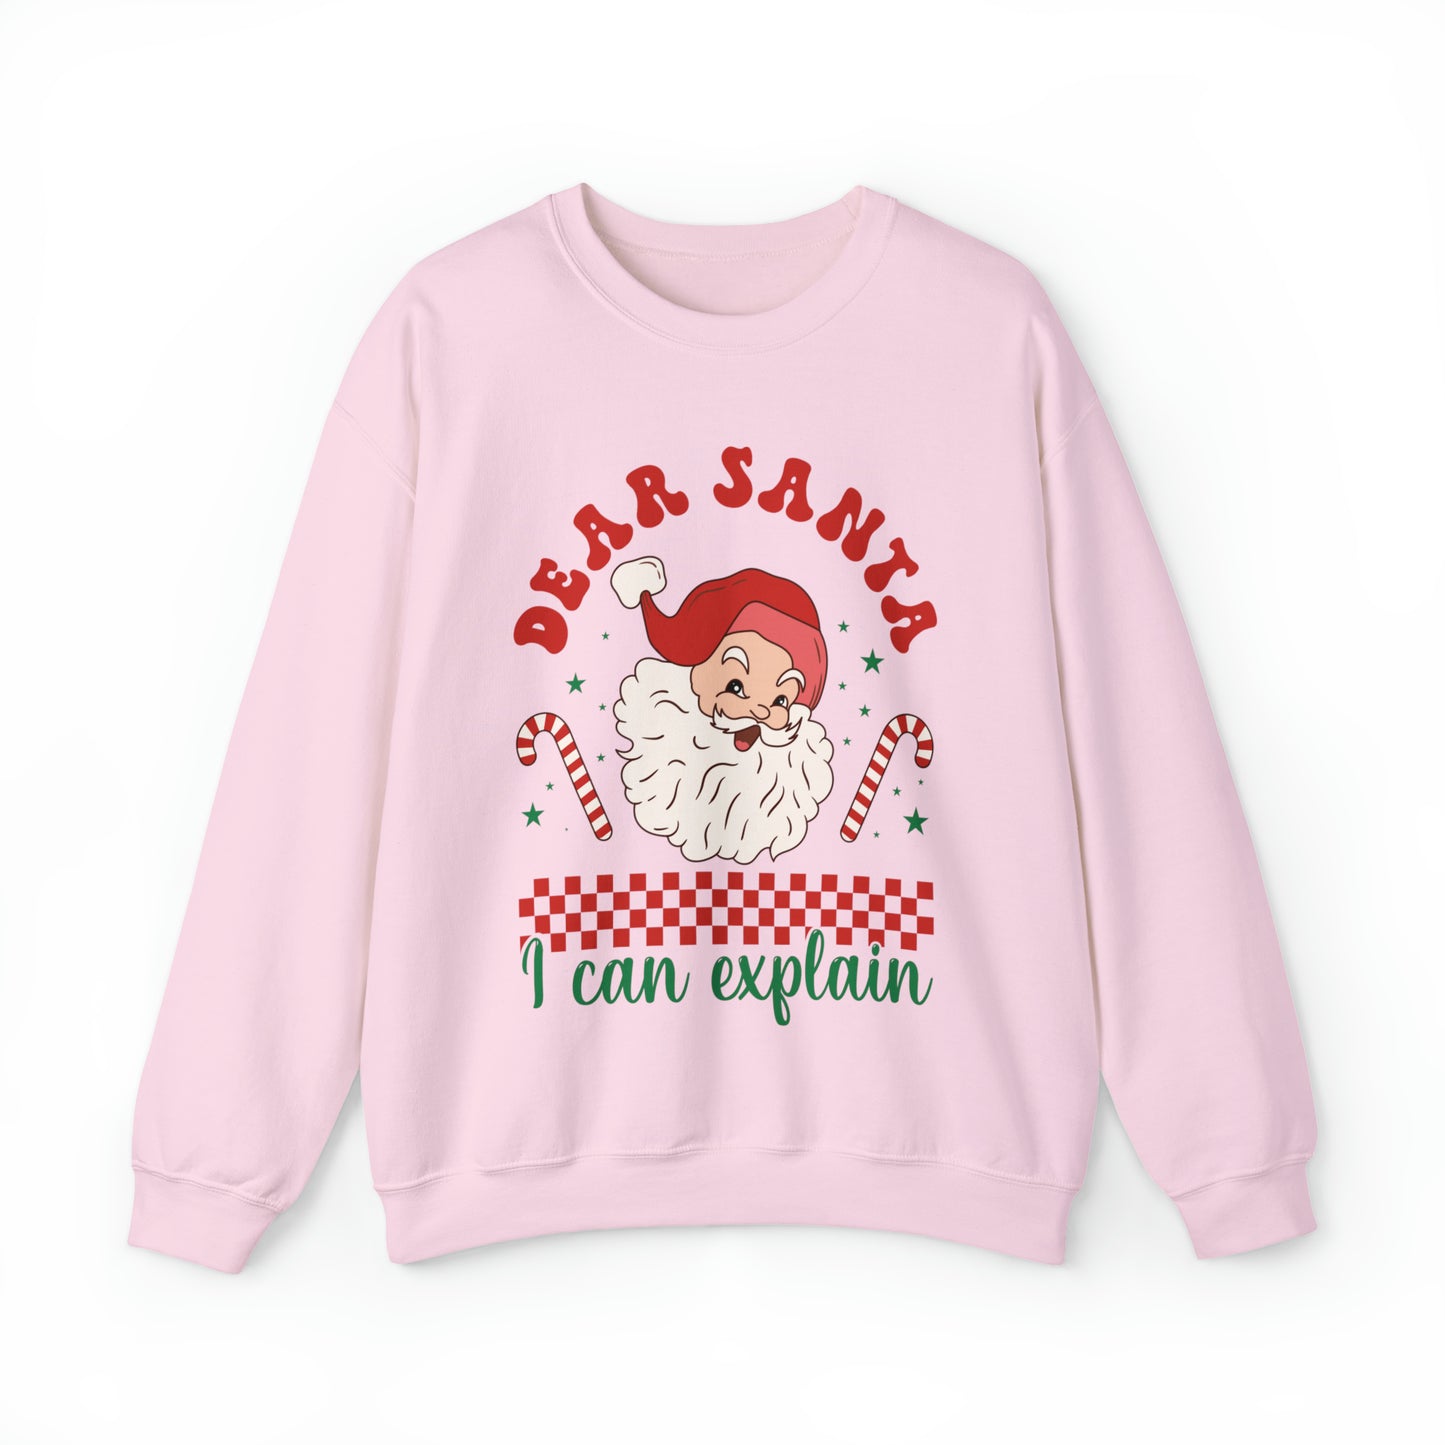 Dear Santa I can explain Women's funny Christmas Crewneck Sweatshirt